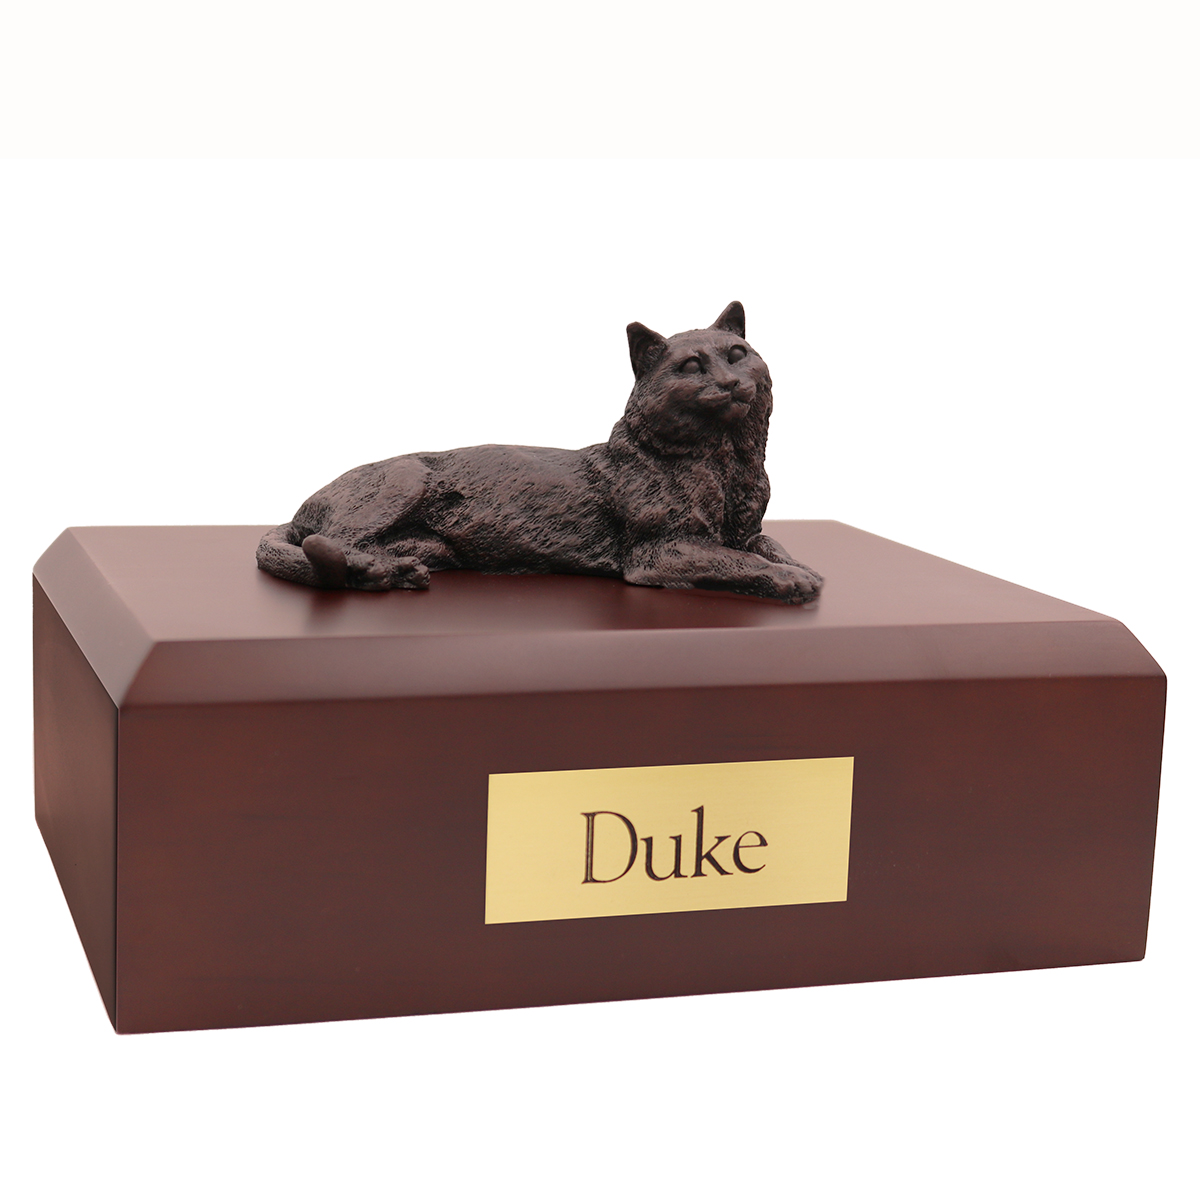 Cat, Tabby, Bronze - Figurine Urn